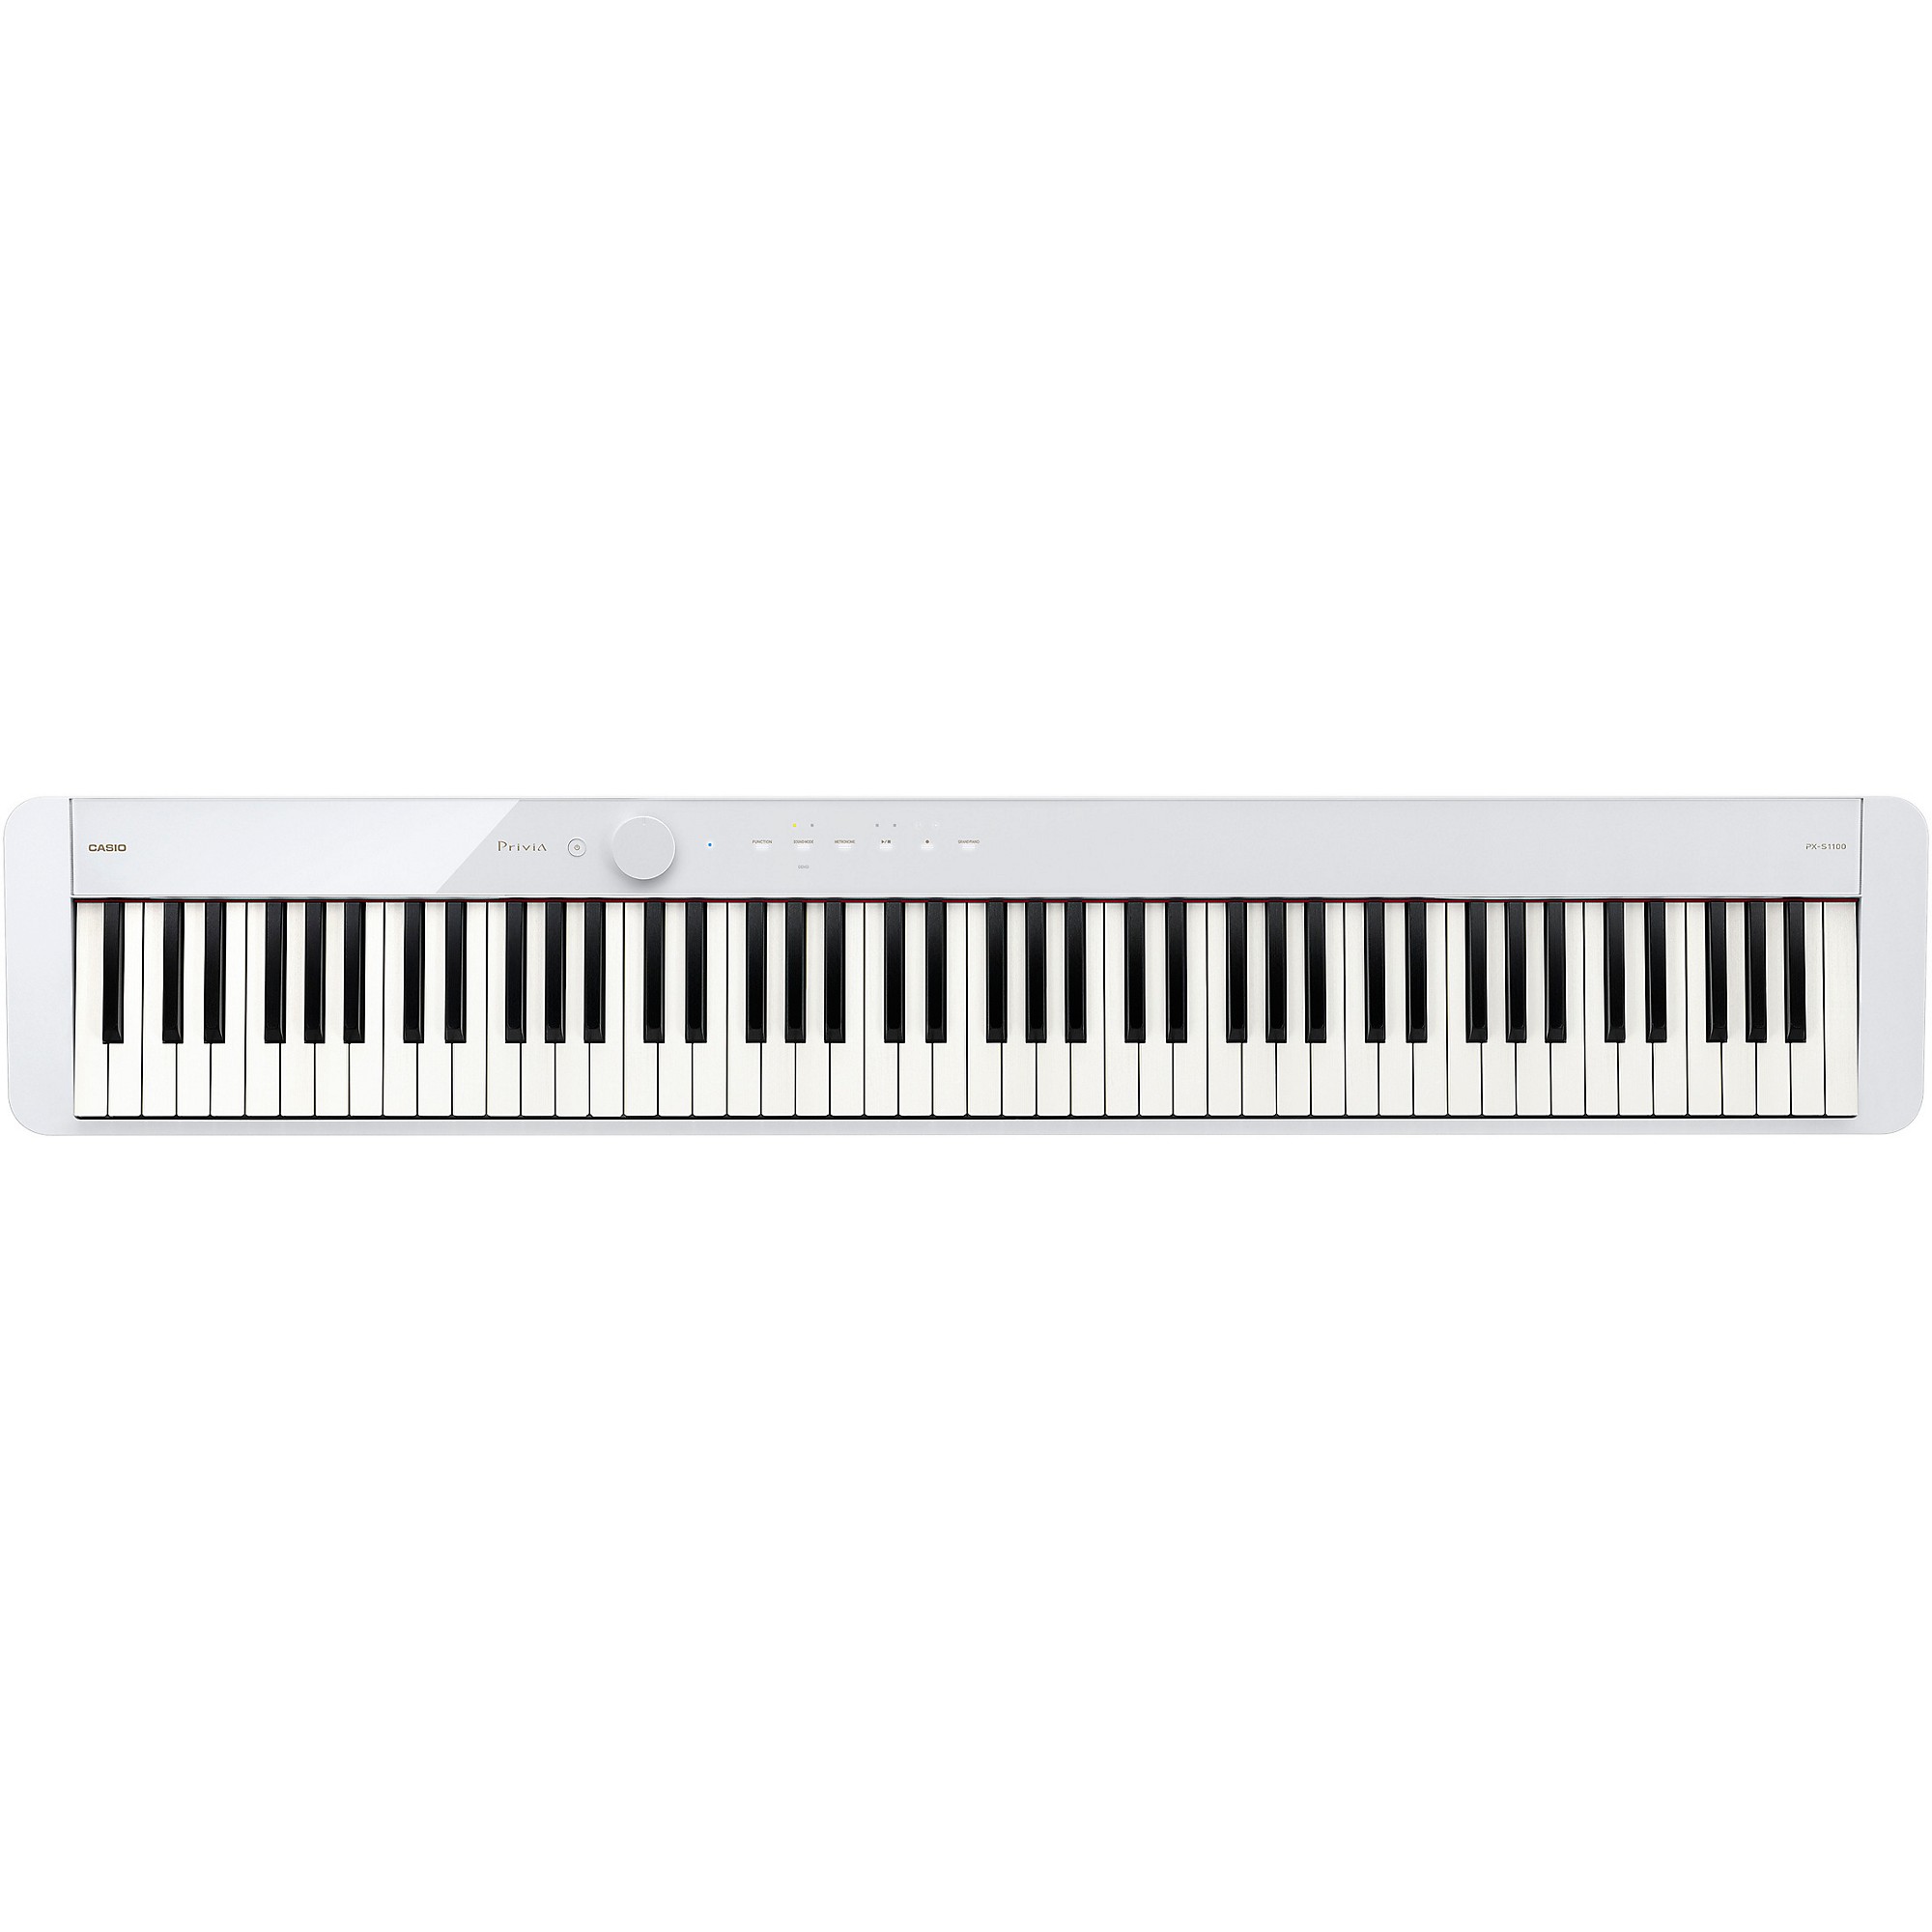 Casio PX-S1100 Privia Digital Piano White | Guitar Center